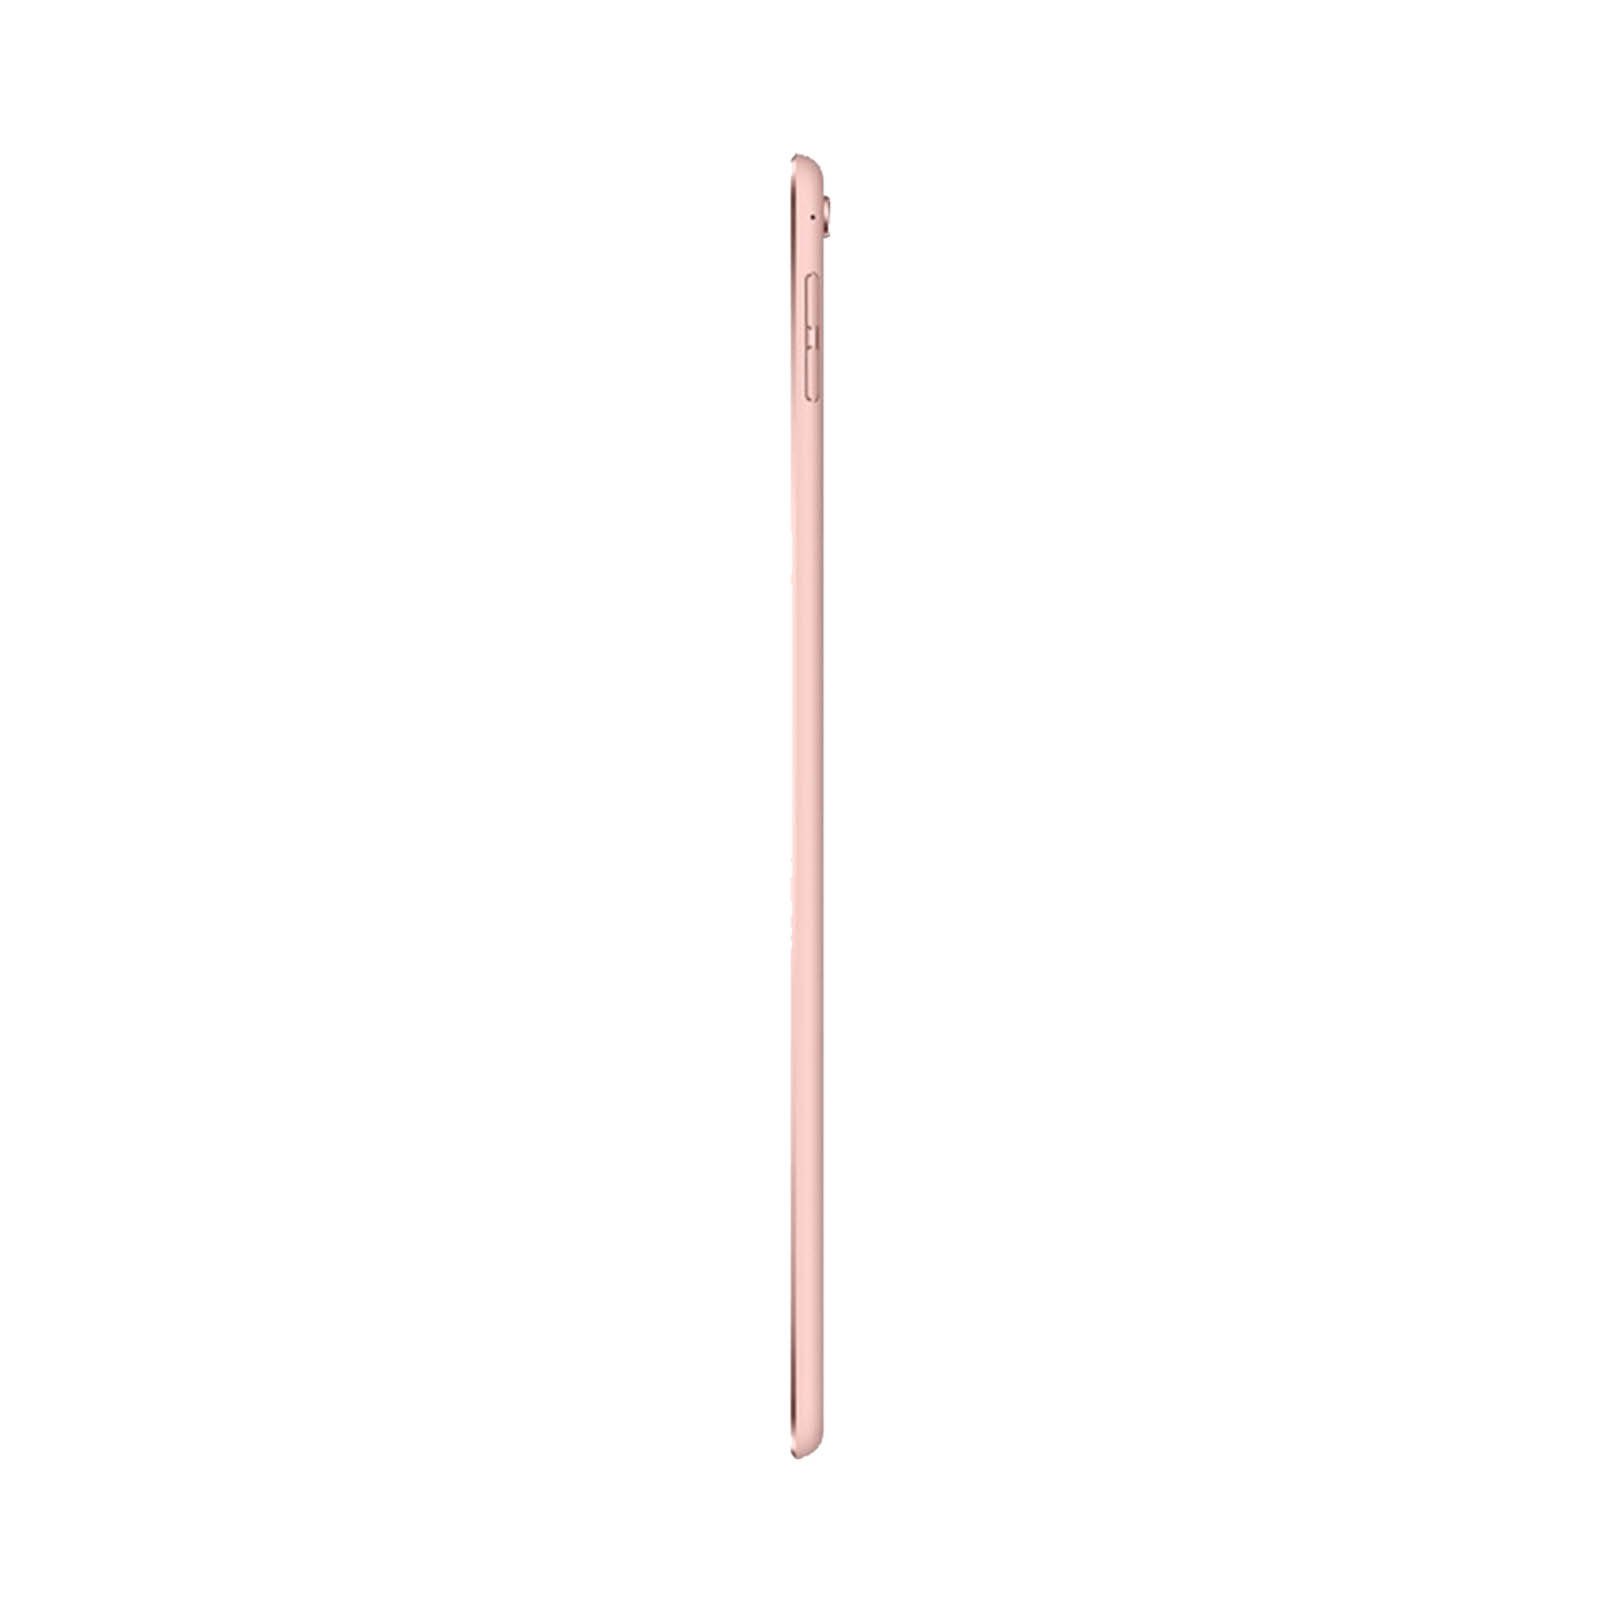 iPad Pro 9.7 Inch 256GB Rose Gold Very Good - Unlocked